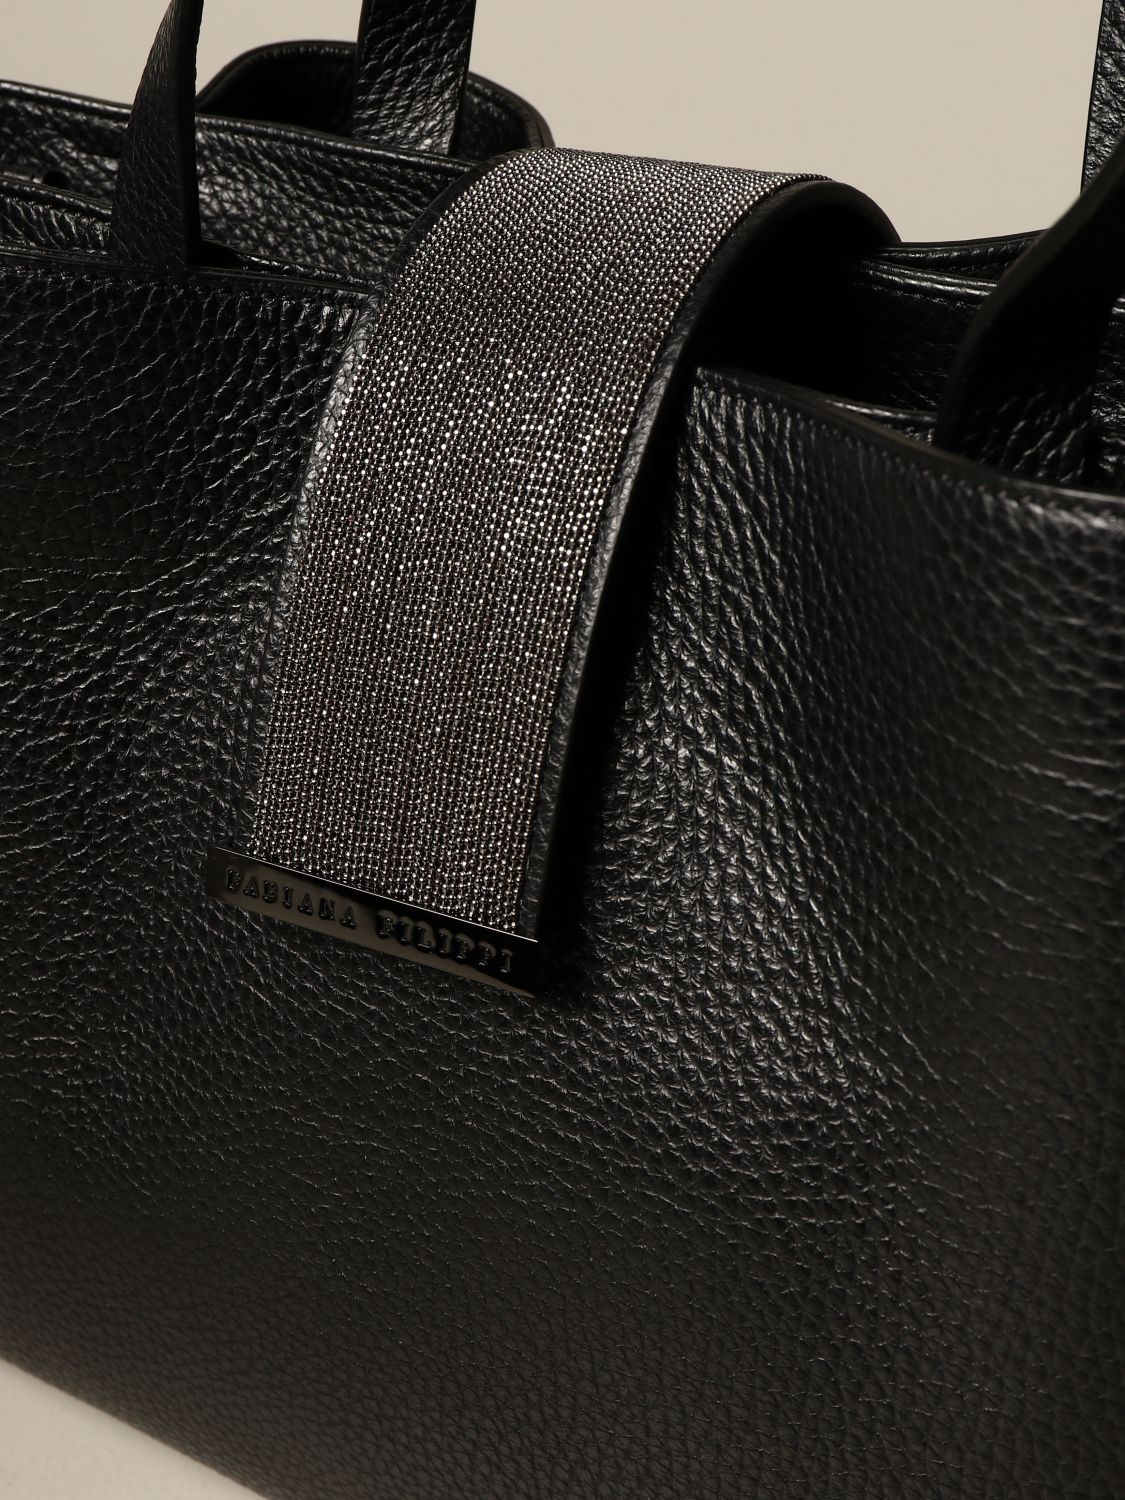 Fabiana Filippi bag in hammered leather